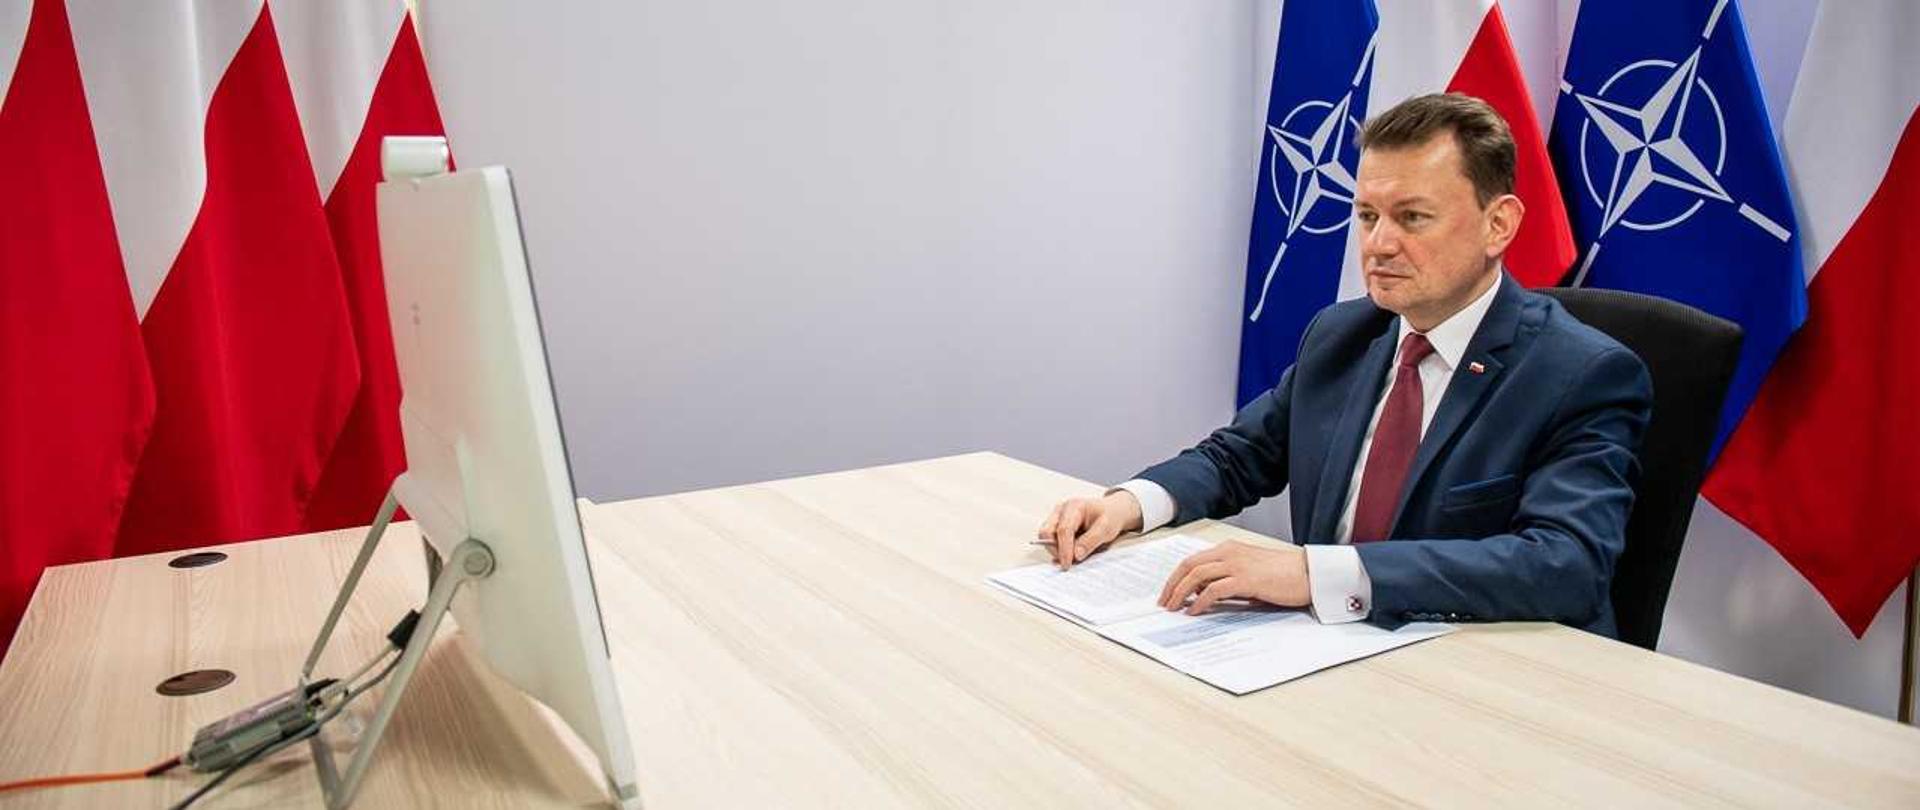 Minister of Defense M. Błaszczak during NATO DefMin_April 2020